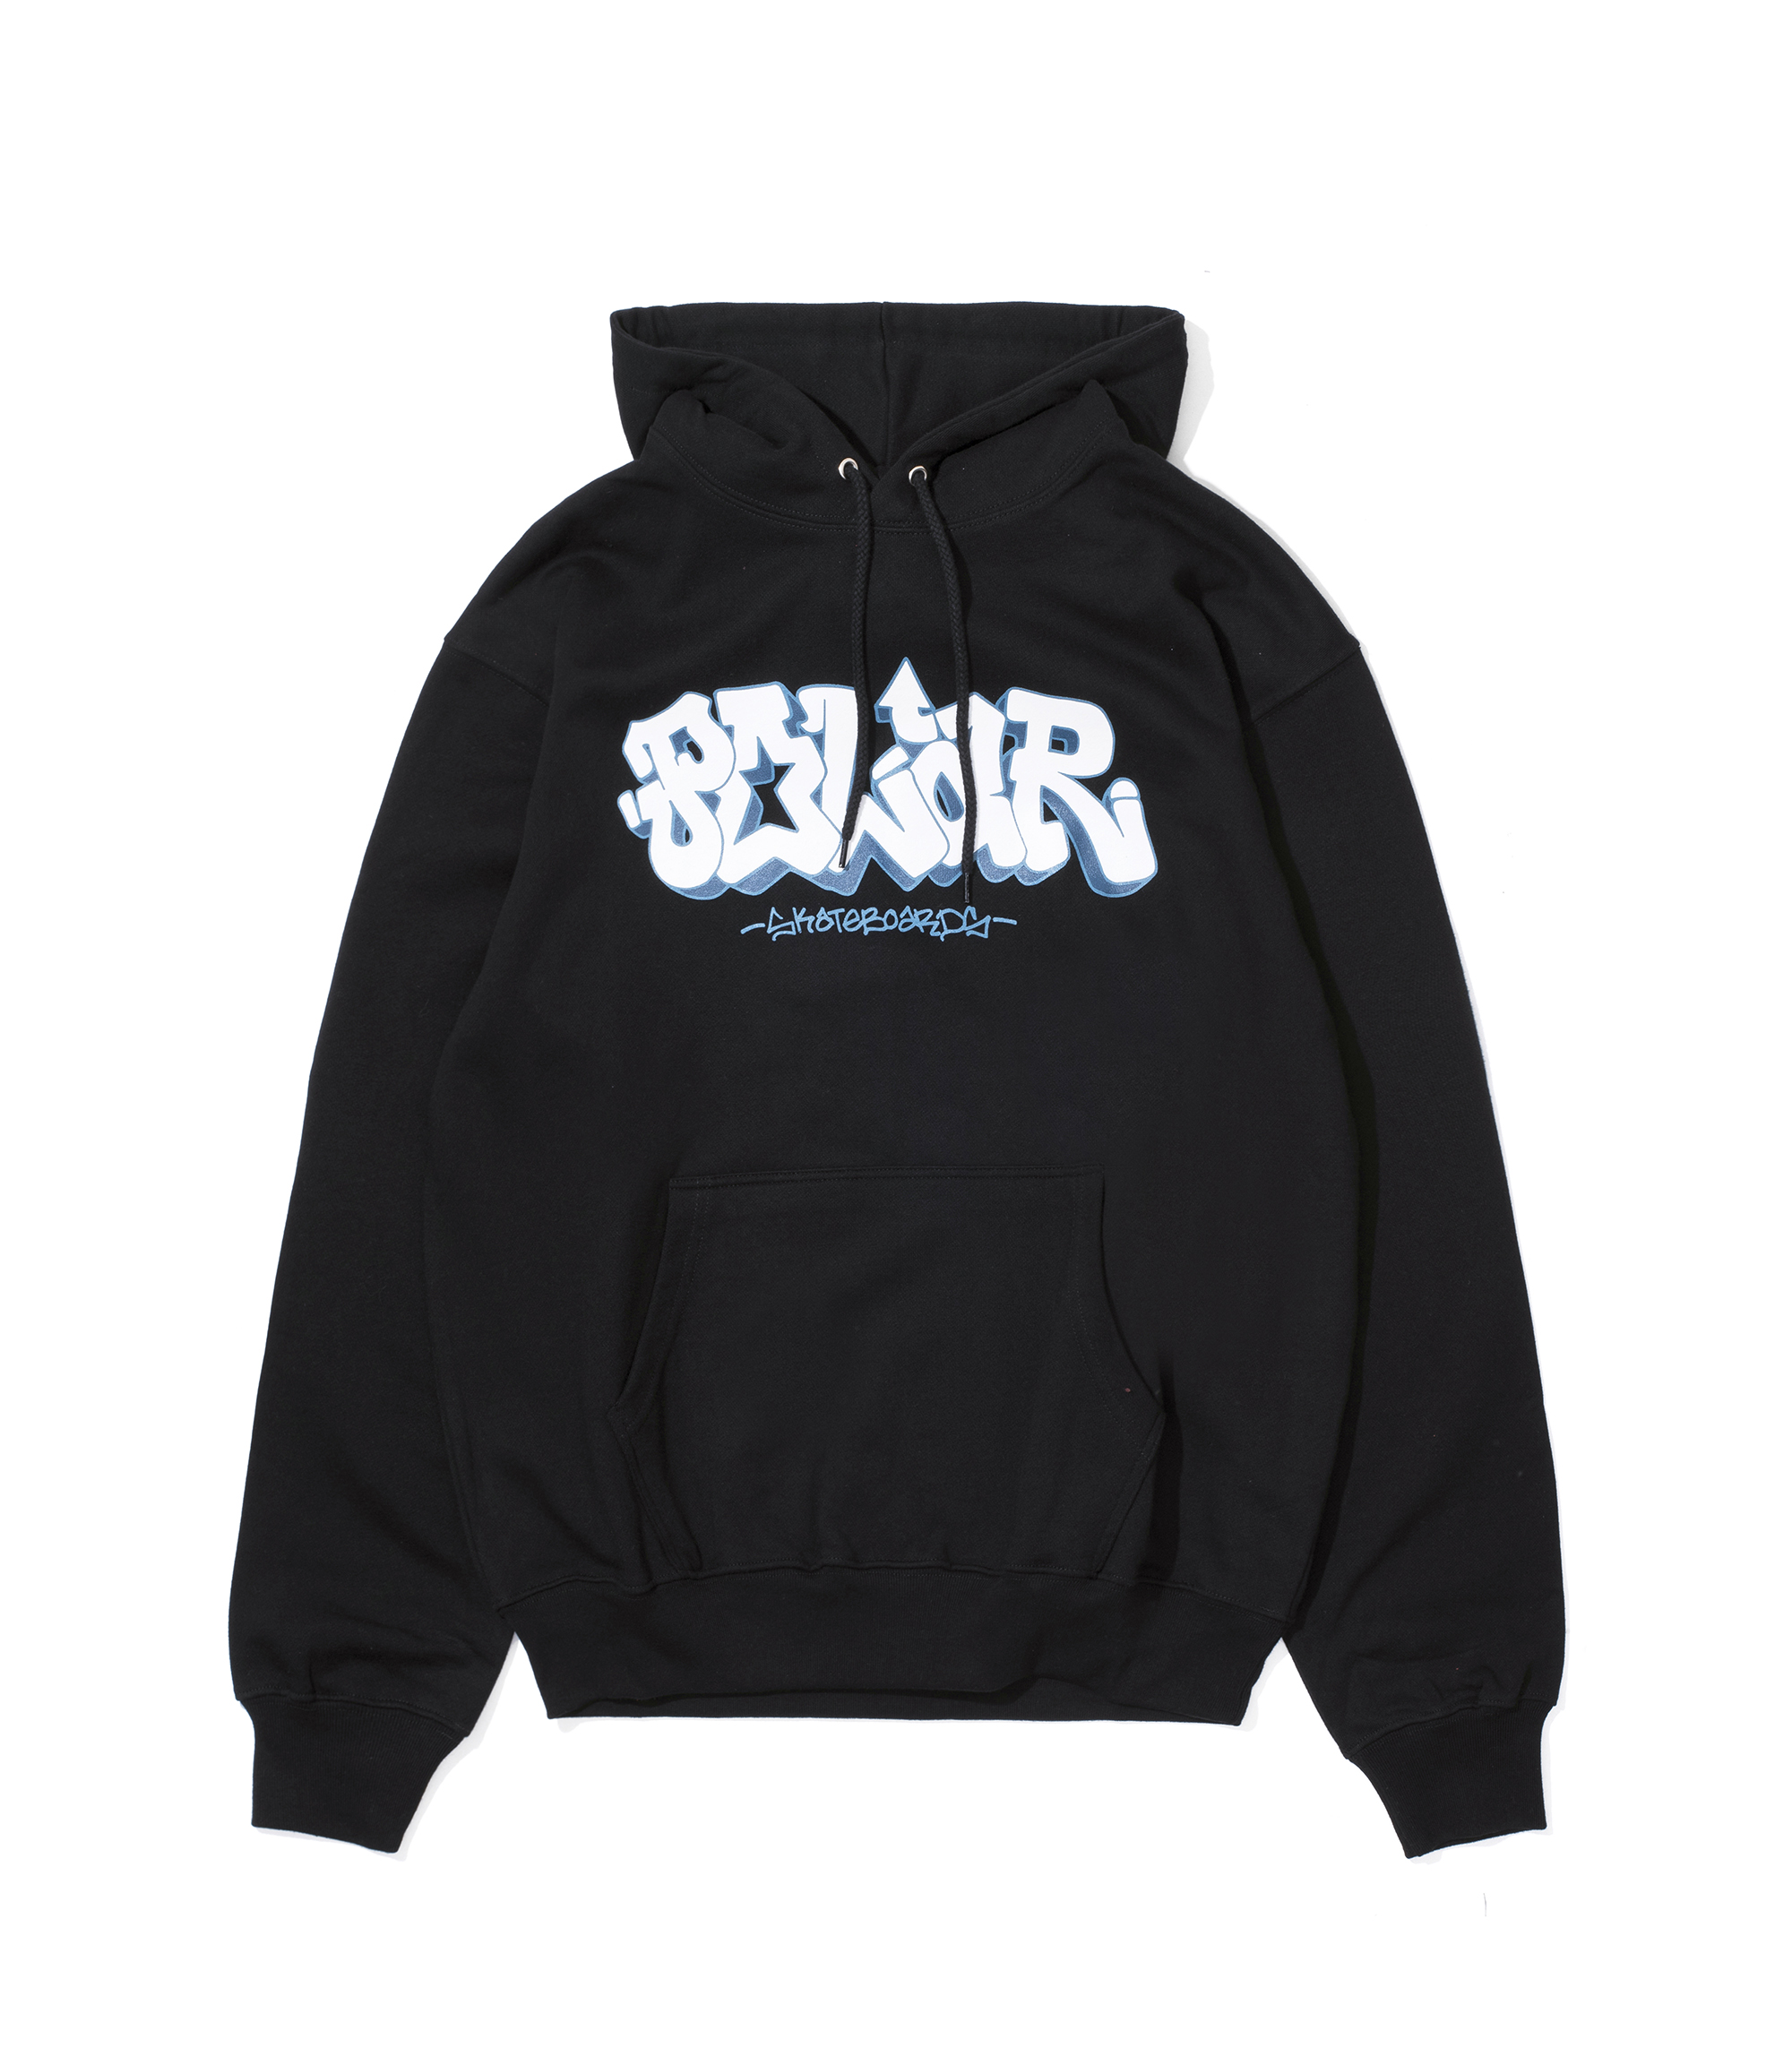 Shop Polar Skate Co x Iggy Graf Hoodie Black at itk online store